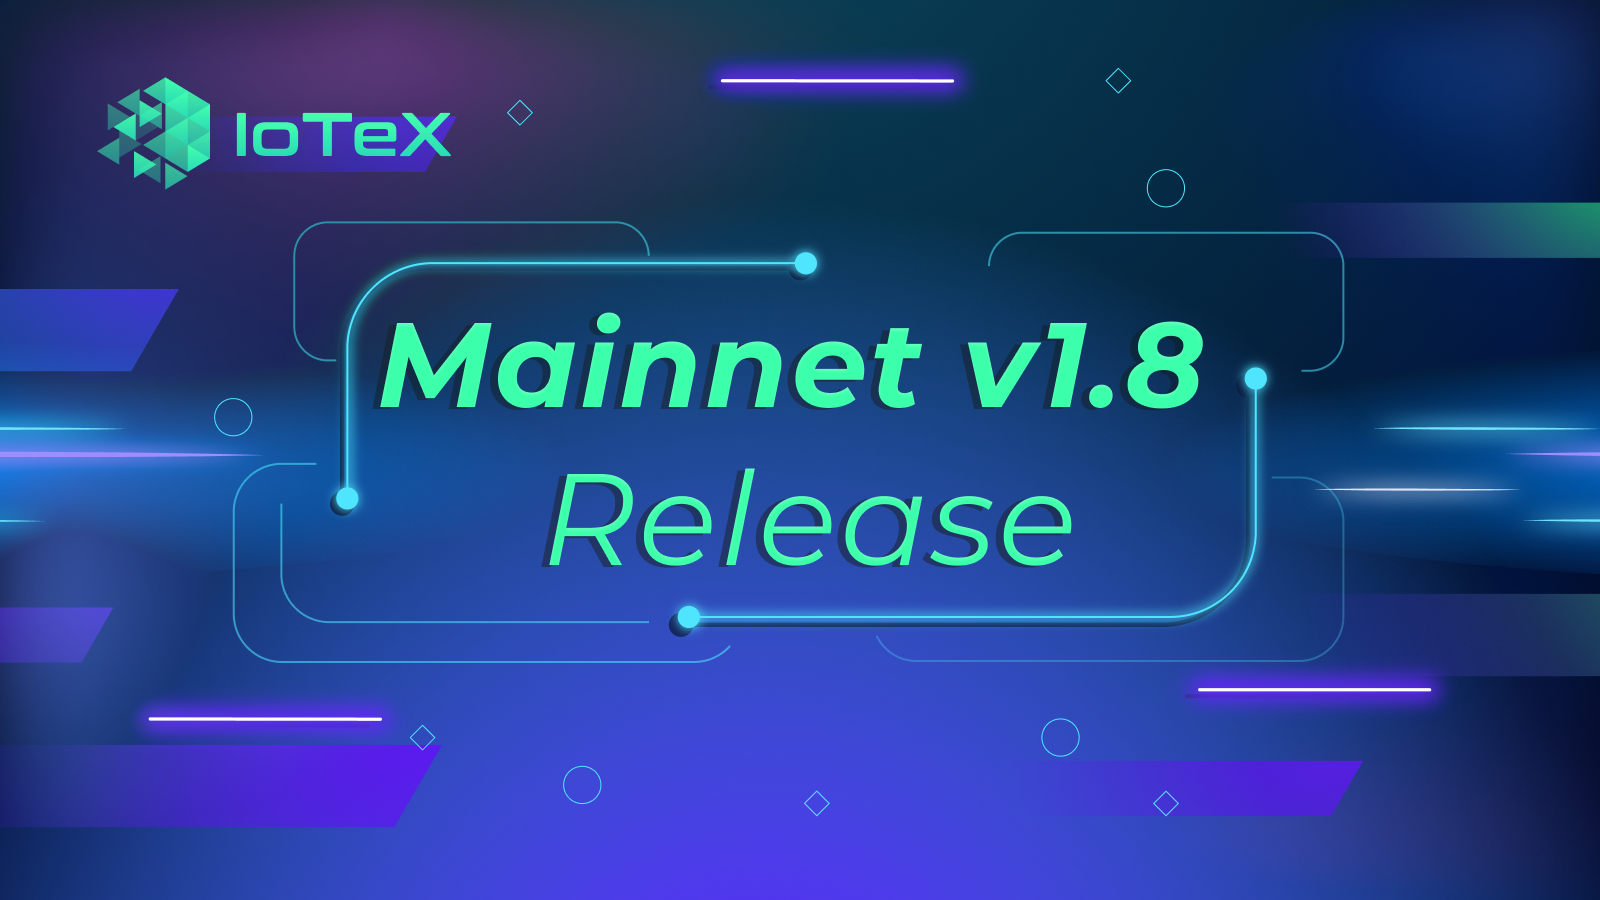 IoTeX Mainnet v1.8 Release Announcement